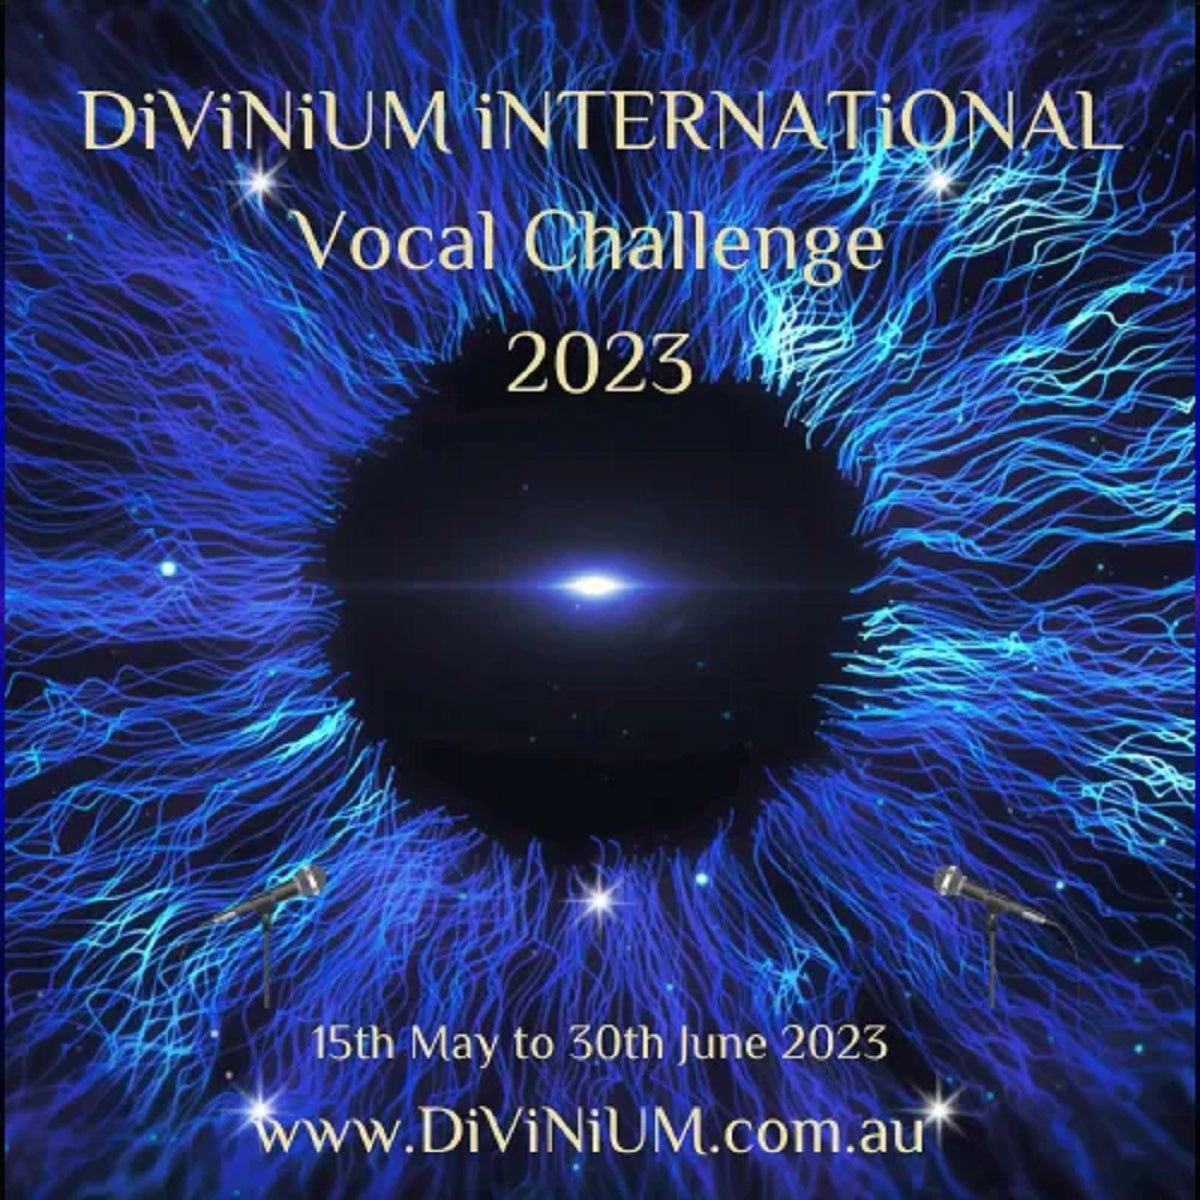 The 2023 DiViNiUM International Vocal Challenge